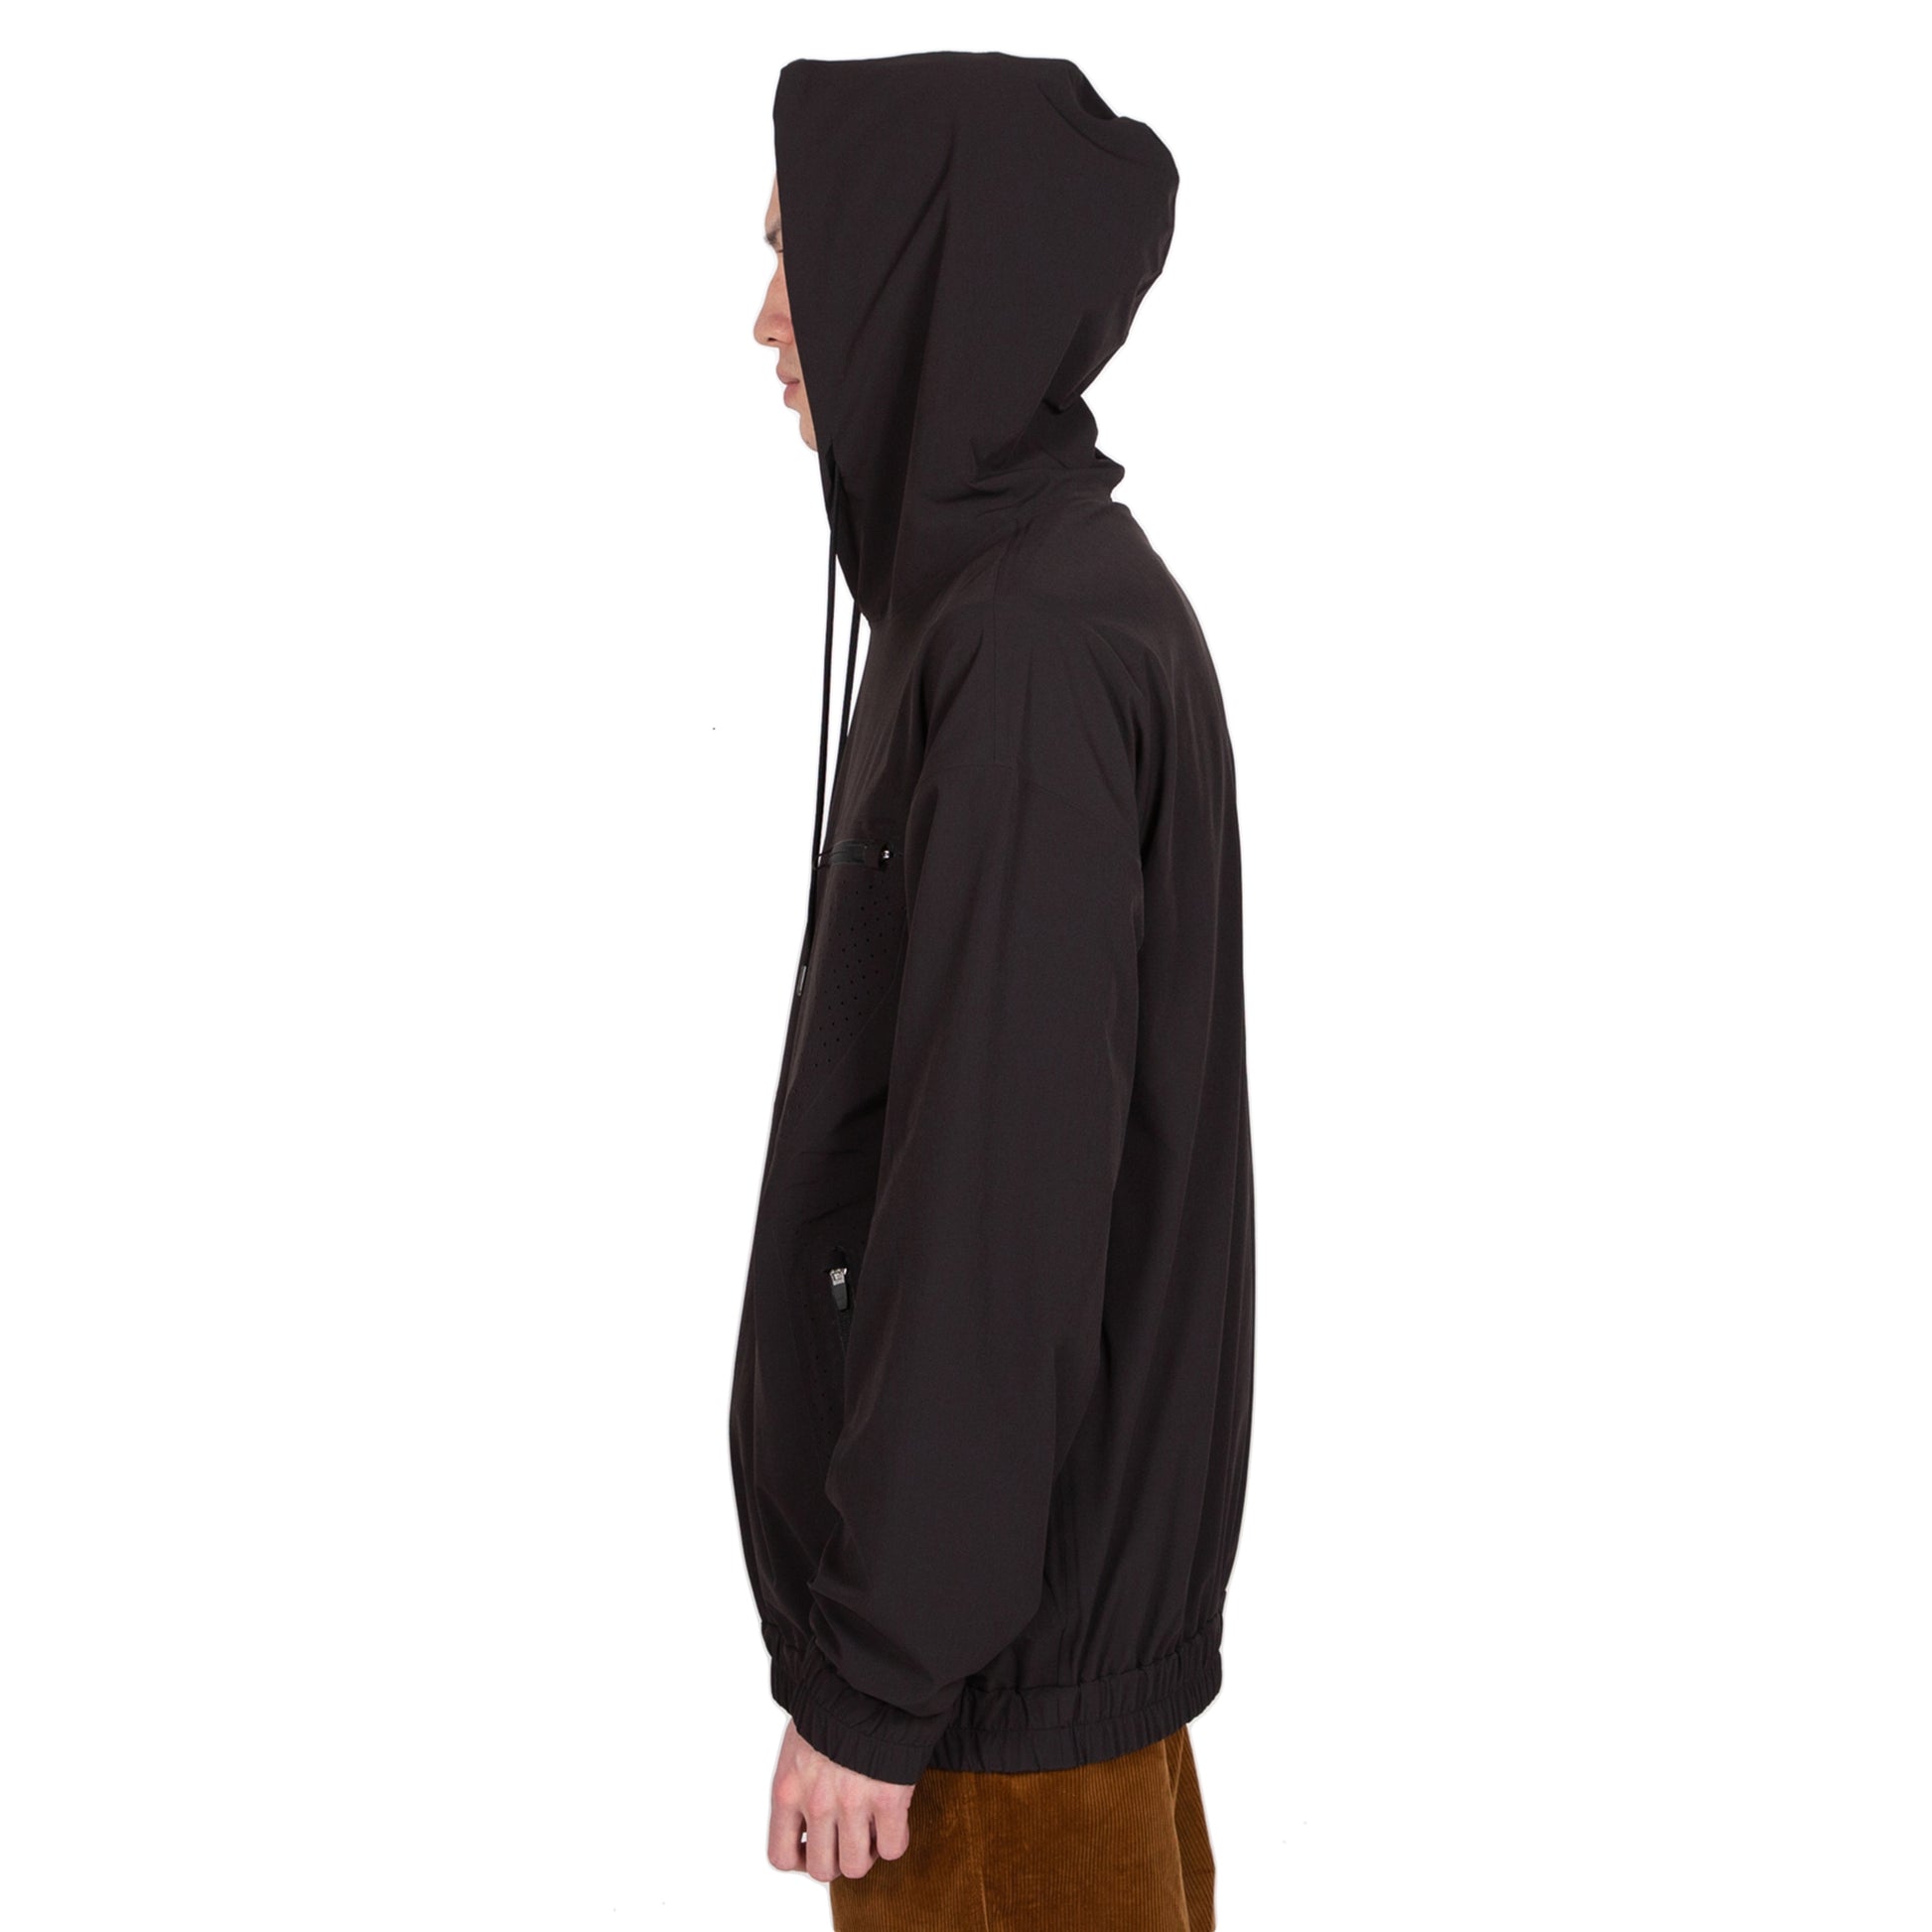 Gramicci Sonora Pertex Hoodie in Black all weather weatherproof outer wear